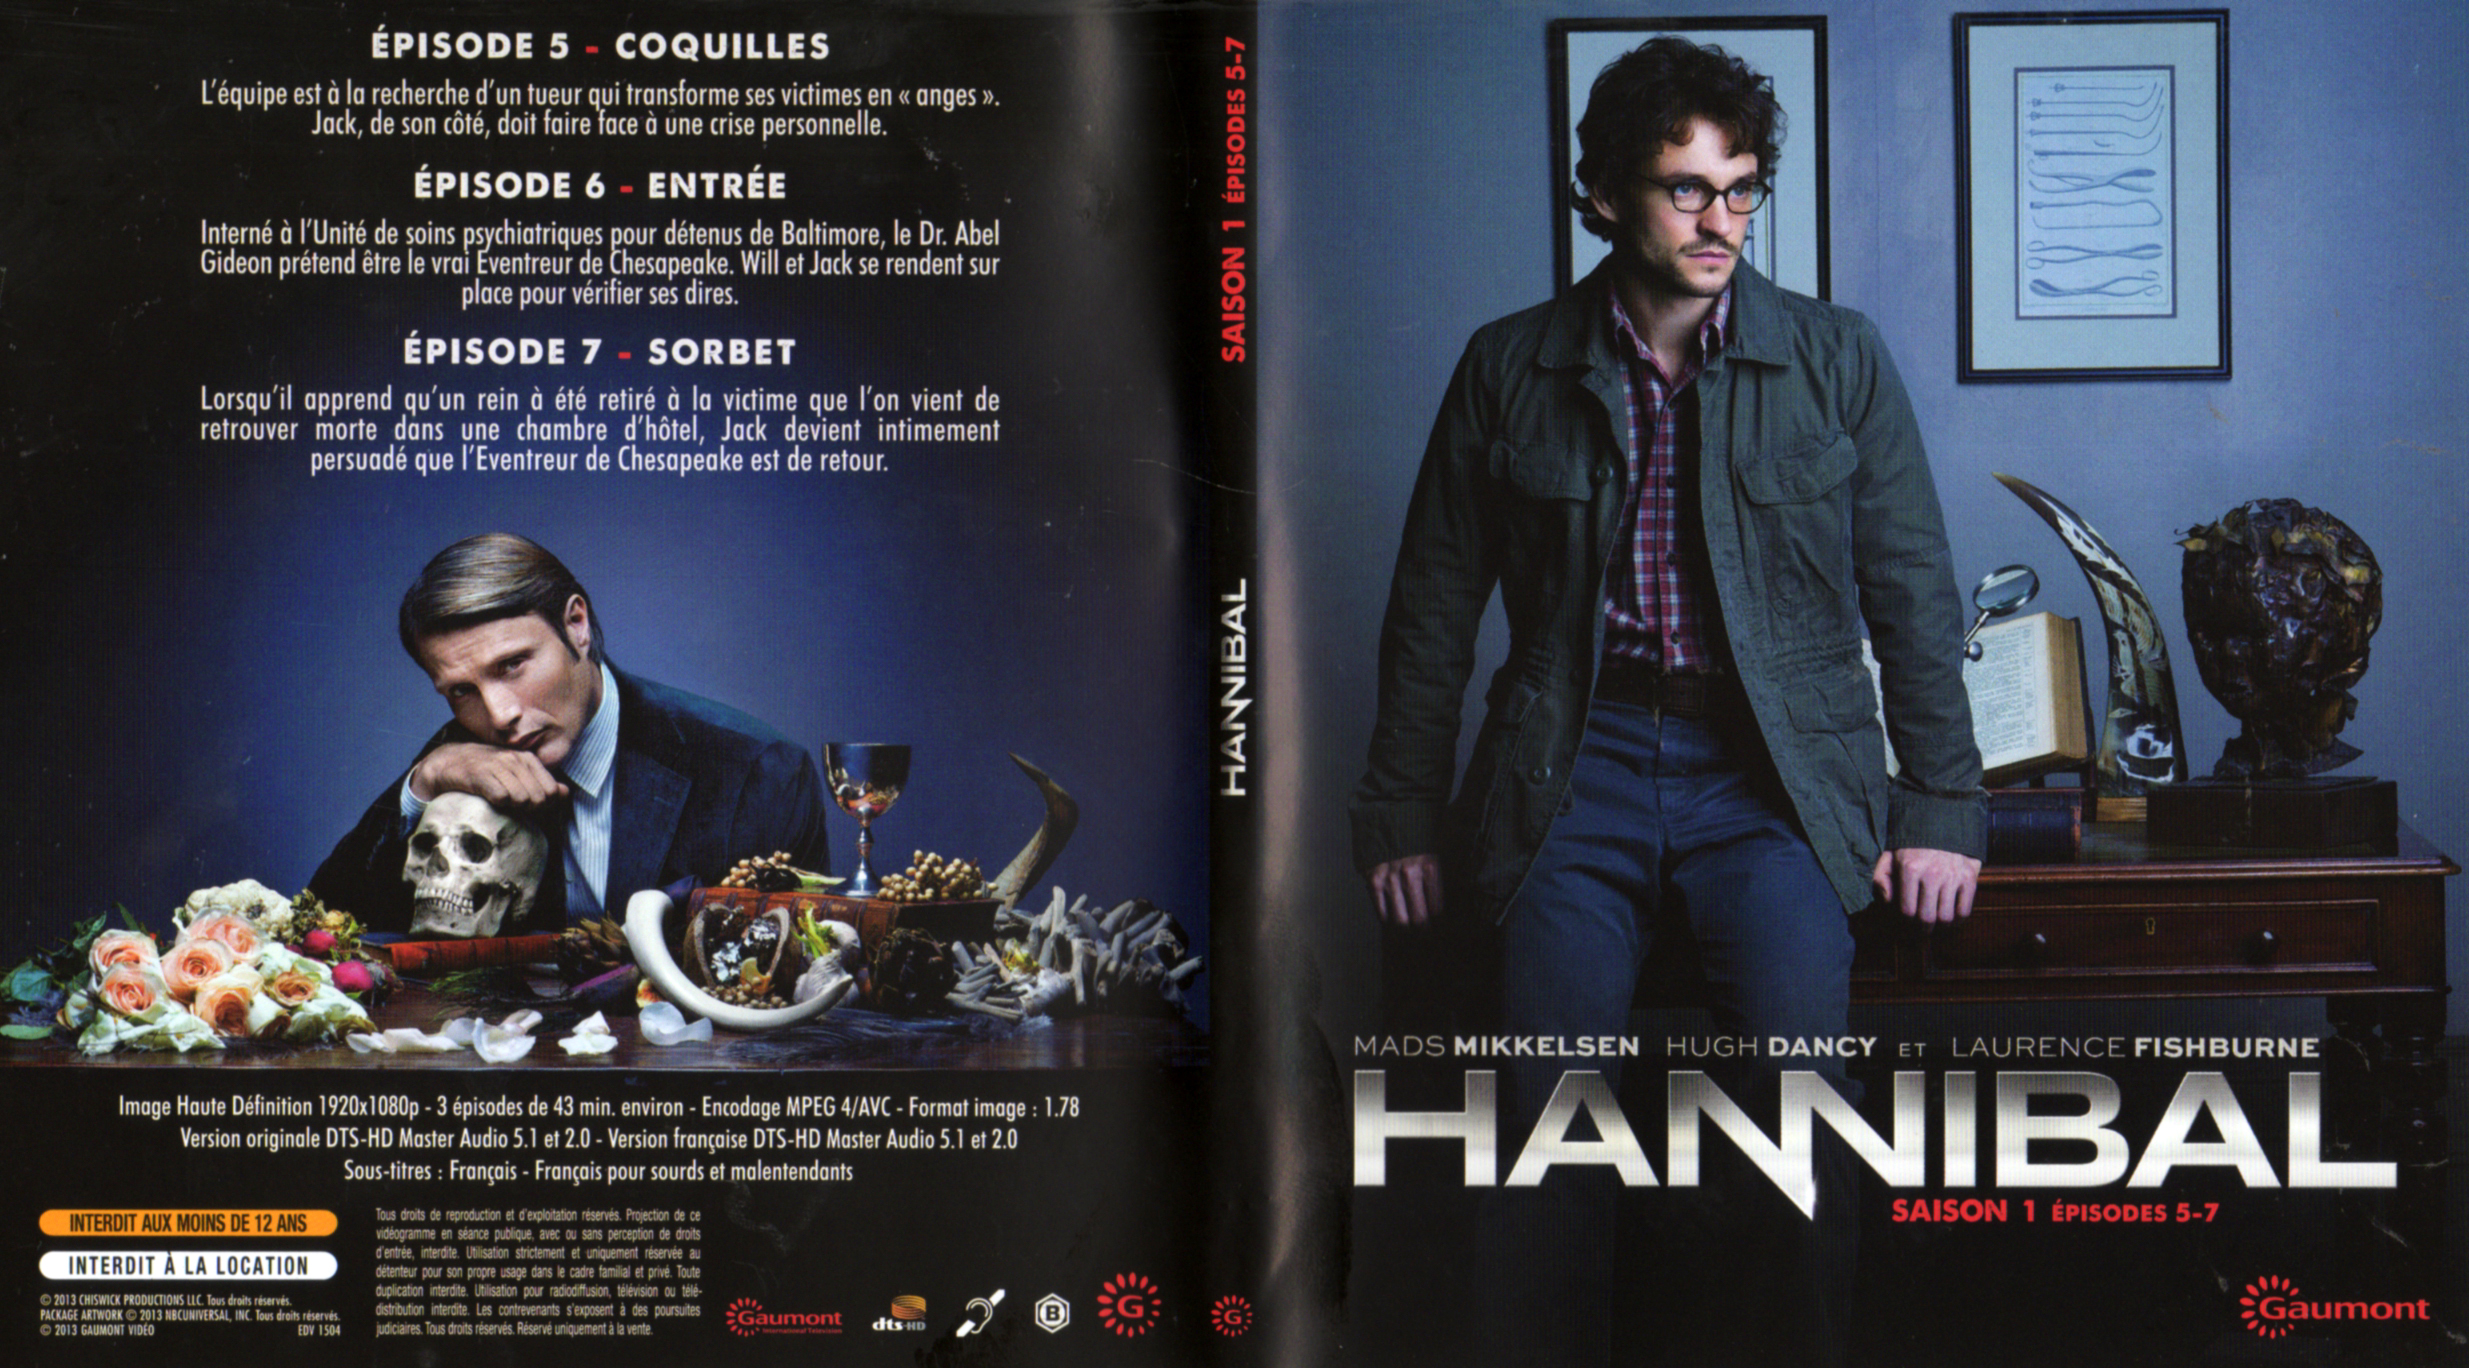 Jaquette DVD Hannibal Saison 1 Ep 5-7 (BLU-RAY)